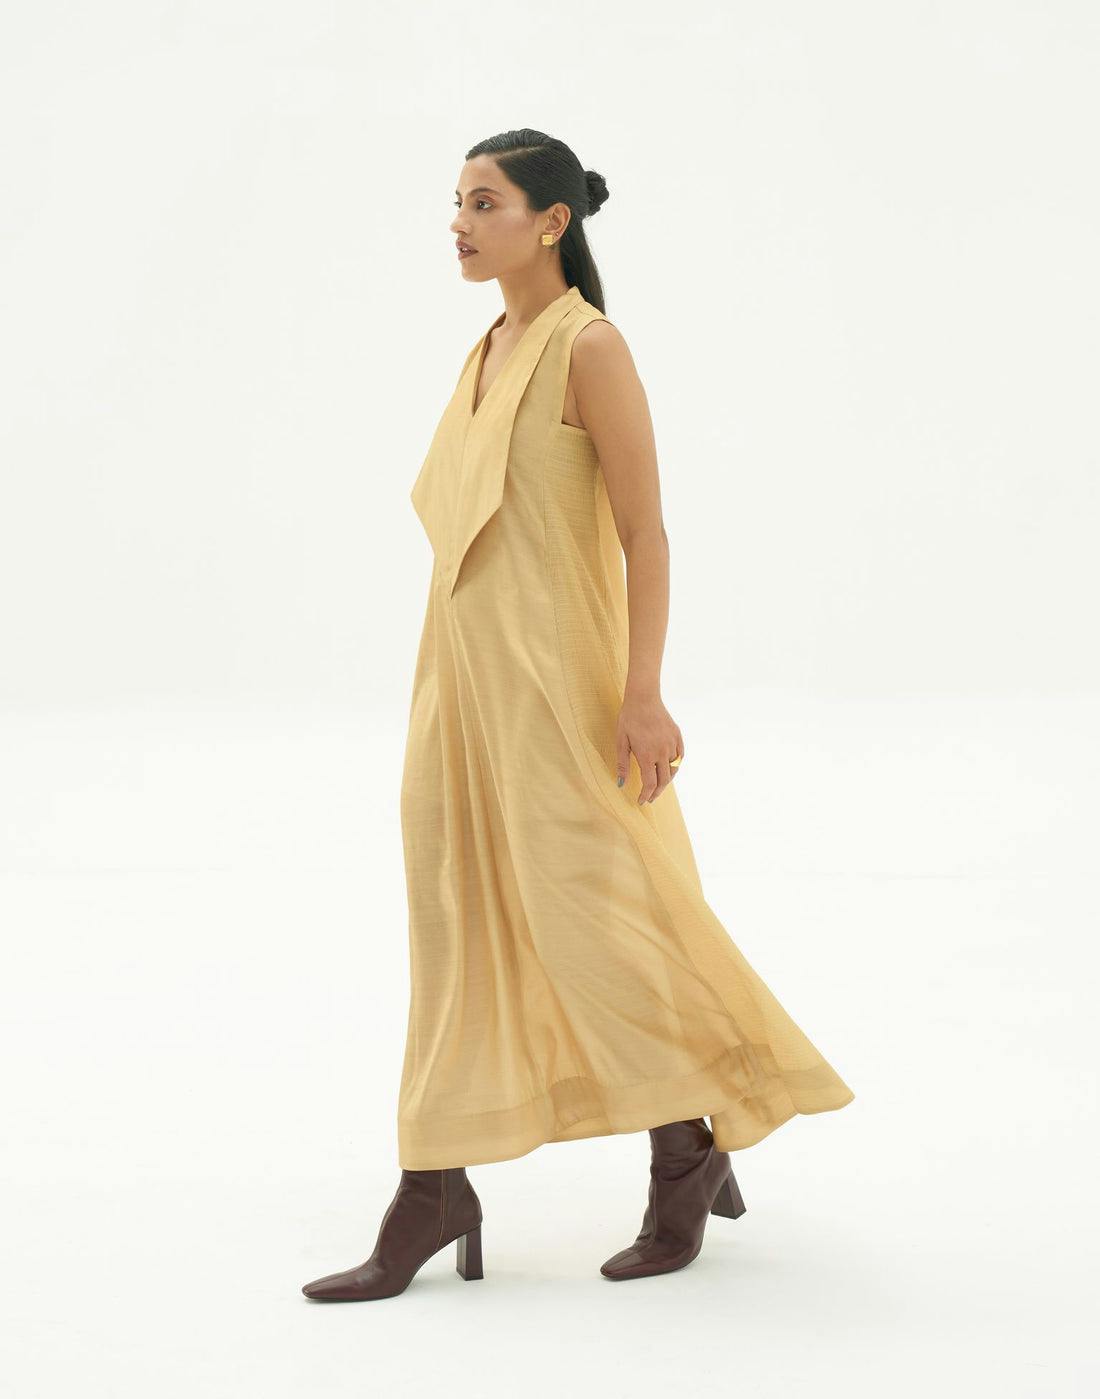 Single colour detail dress, a product by Corpora Studio